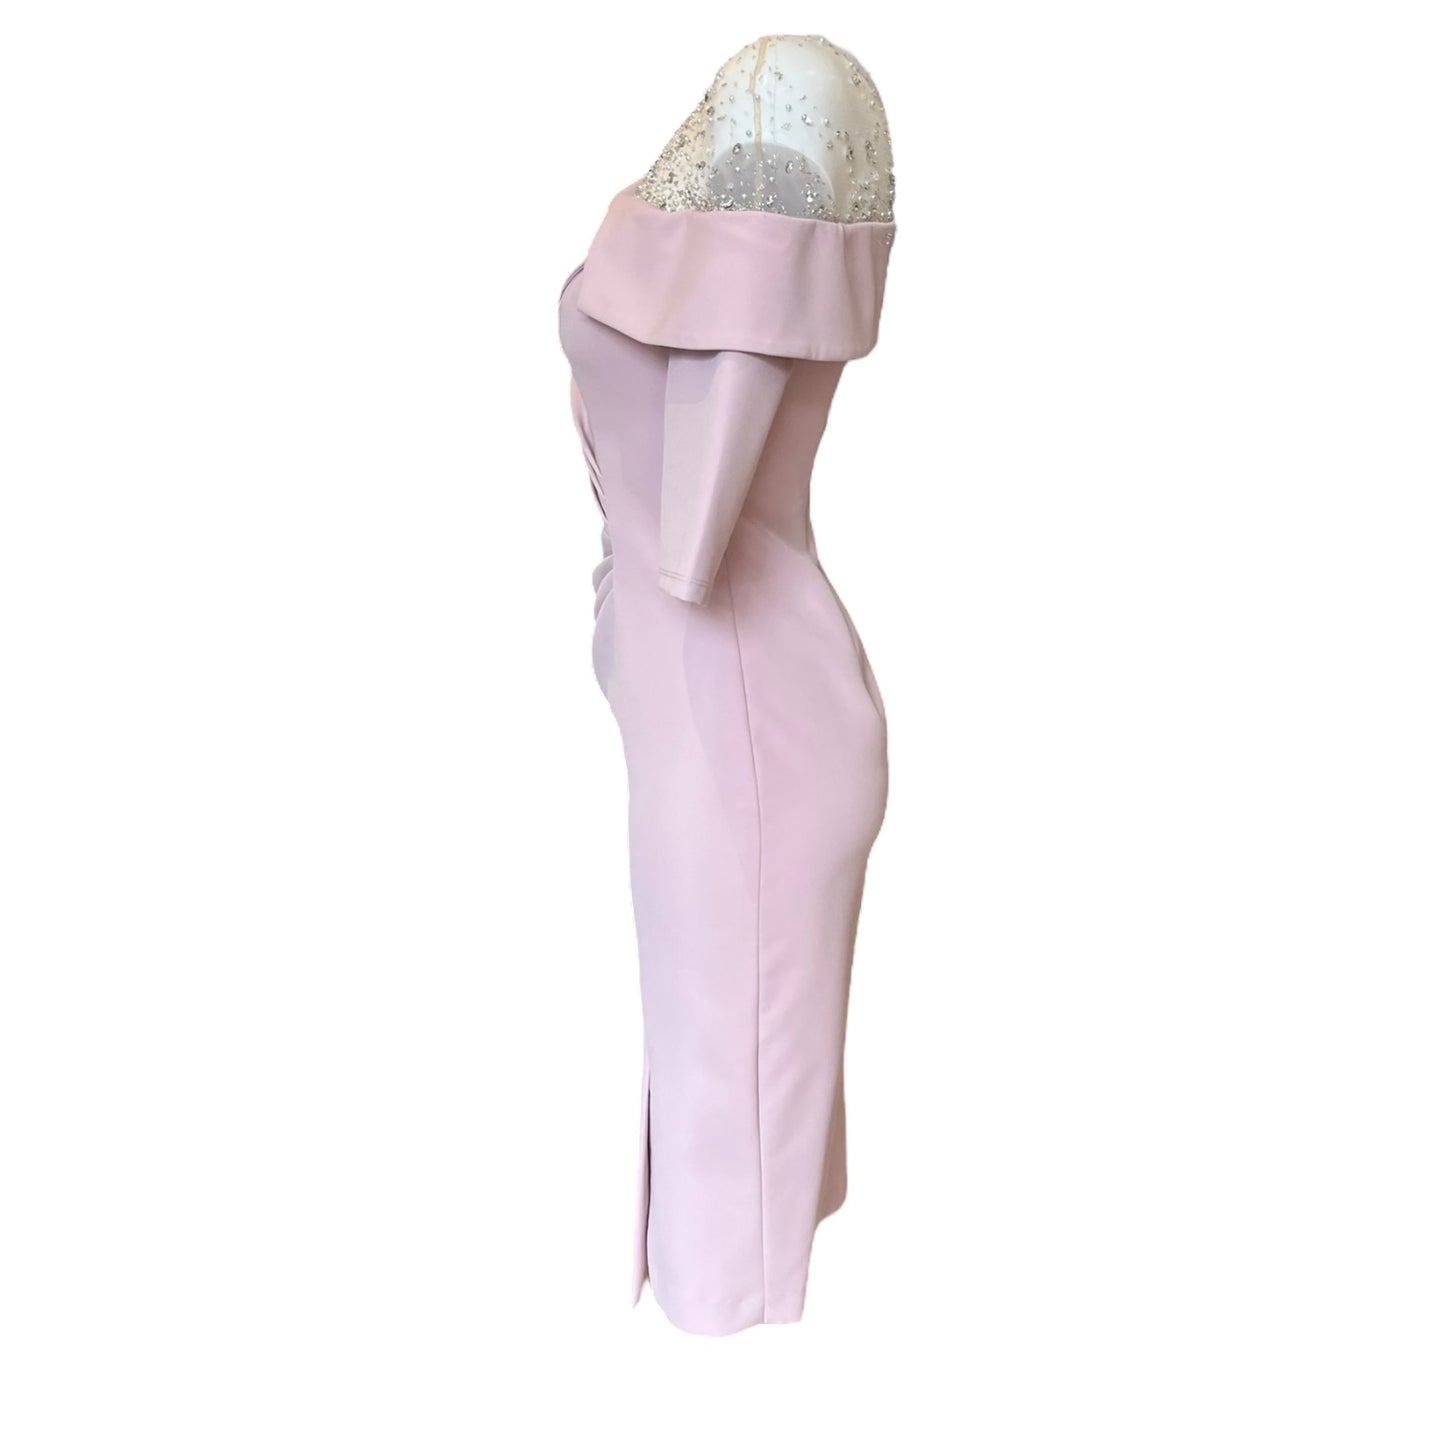 John Charles Blush Pink Dress with Stole - 8